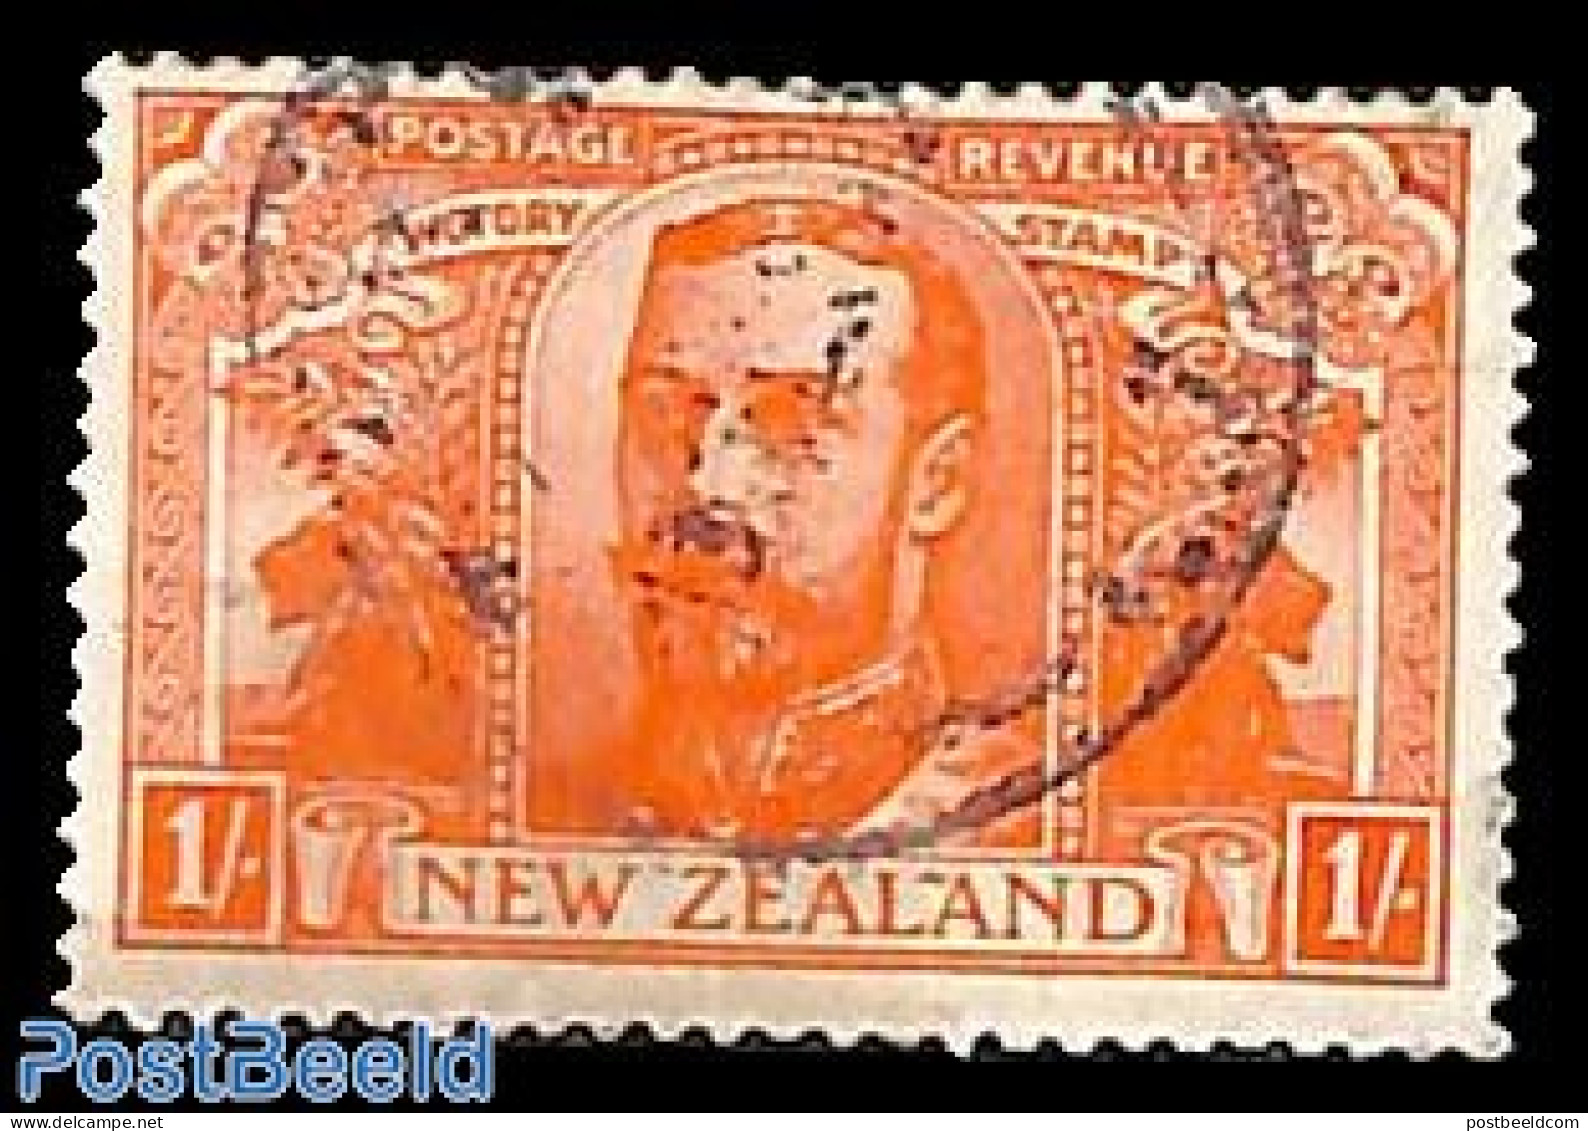 New Zealand 1920 1sh, Used, Used Or CTO - Usati